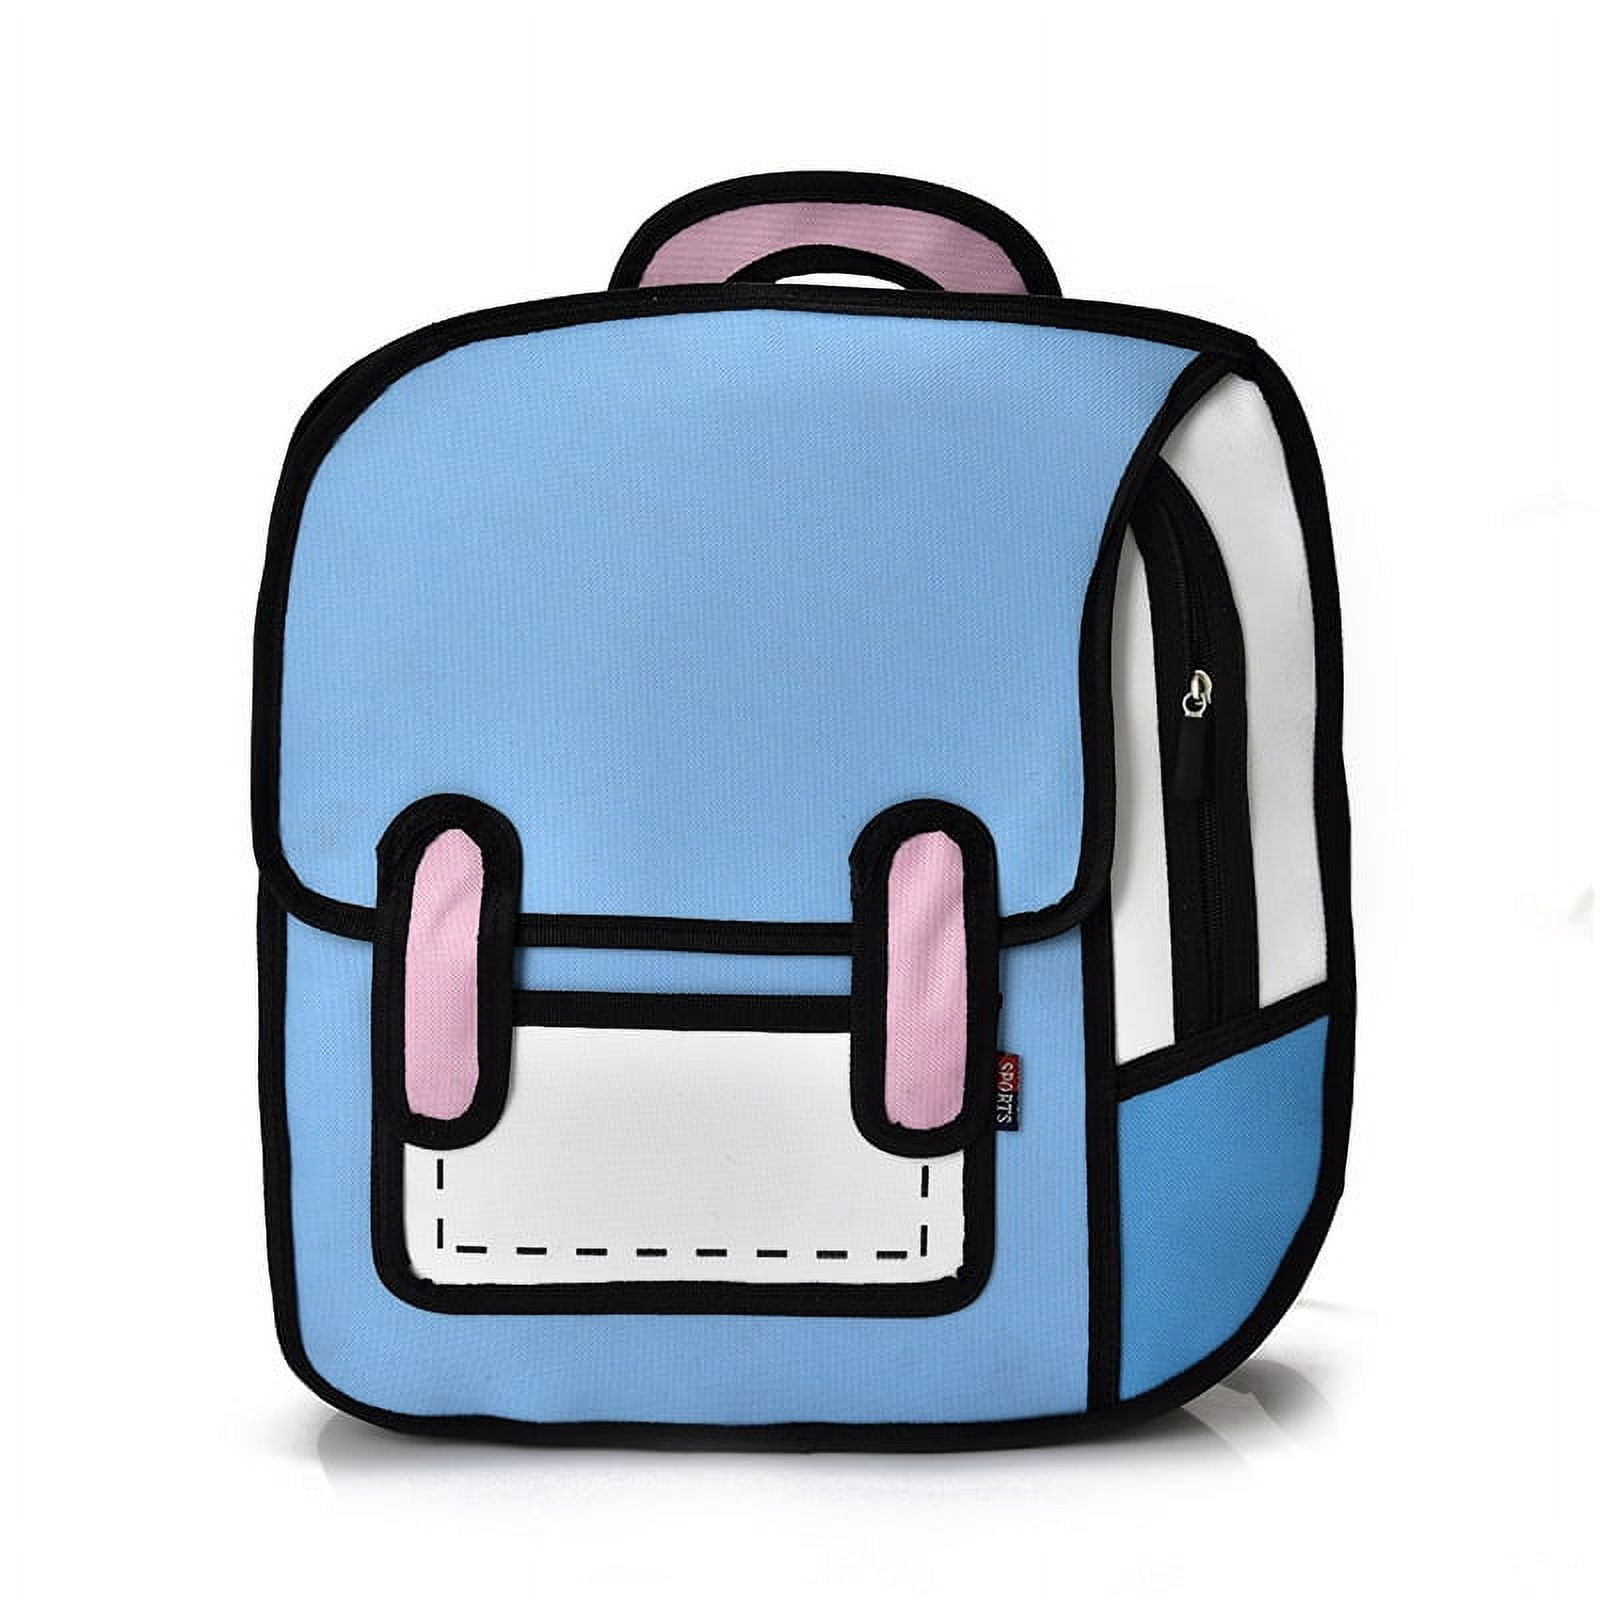 Premium Vector | Bag, school bag, backpack, ladies bag single-line art  drawing continues line vector illustration